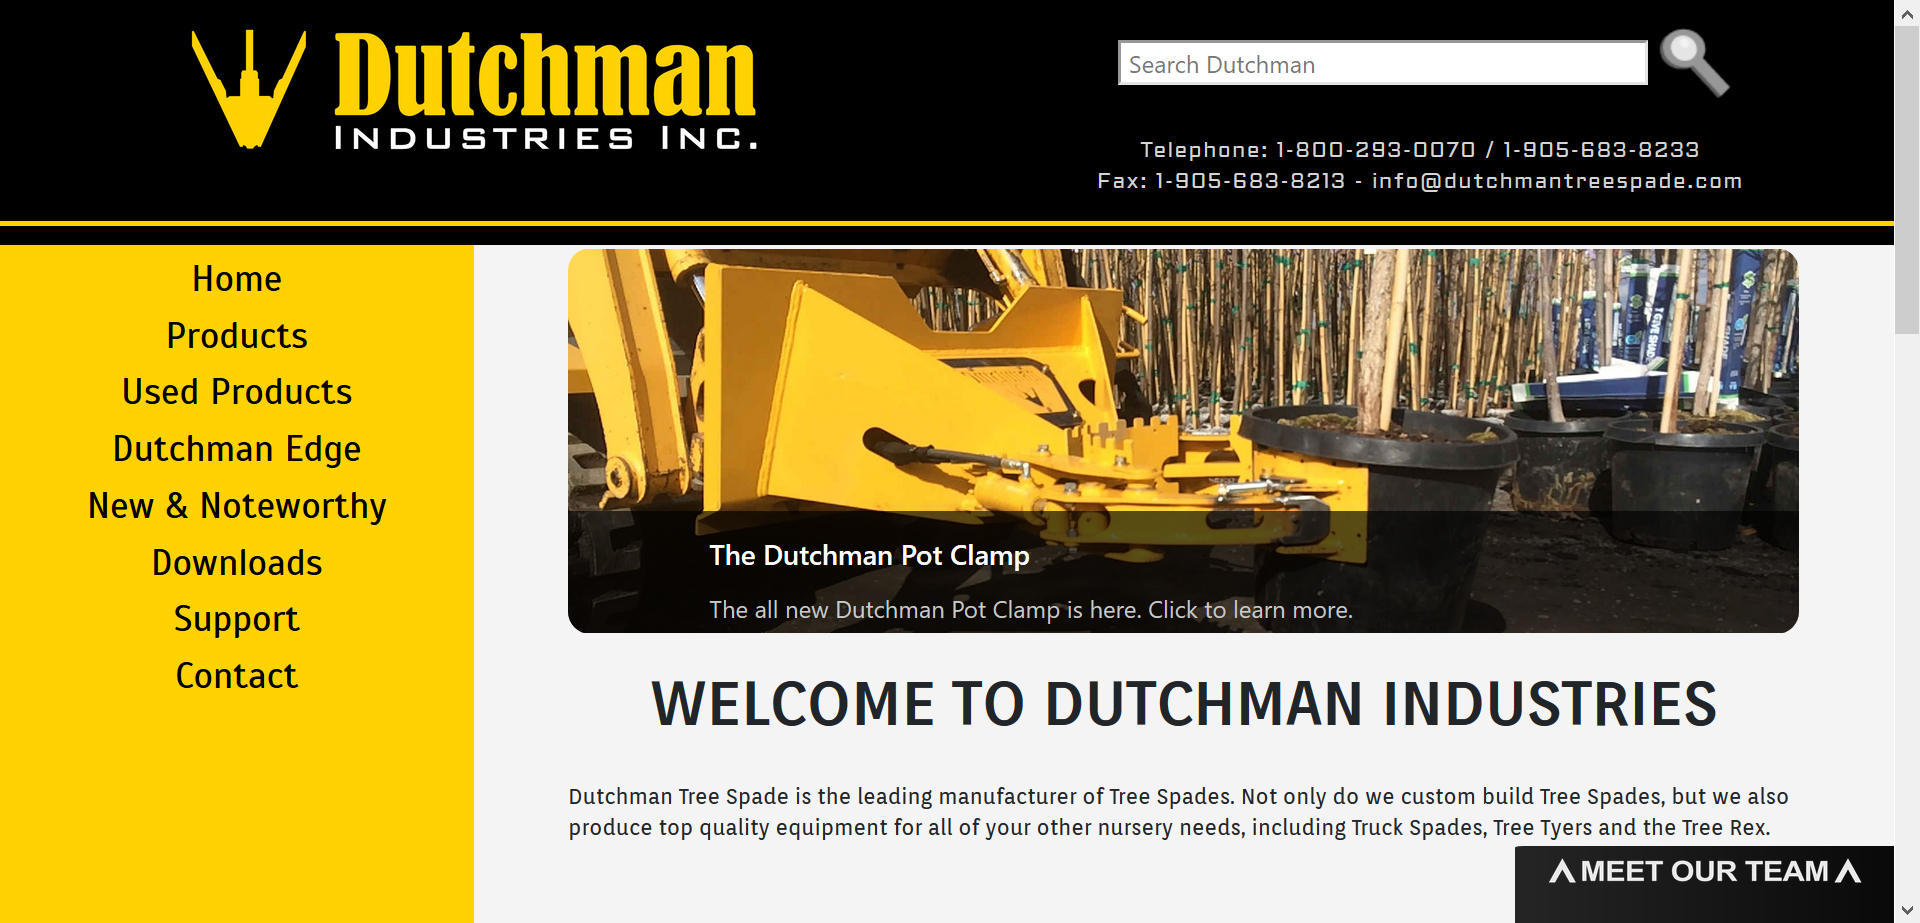 Dutchman Industries